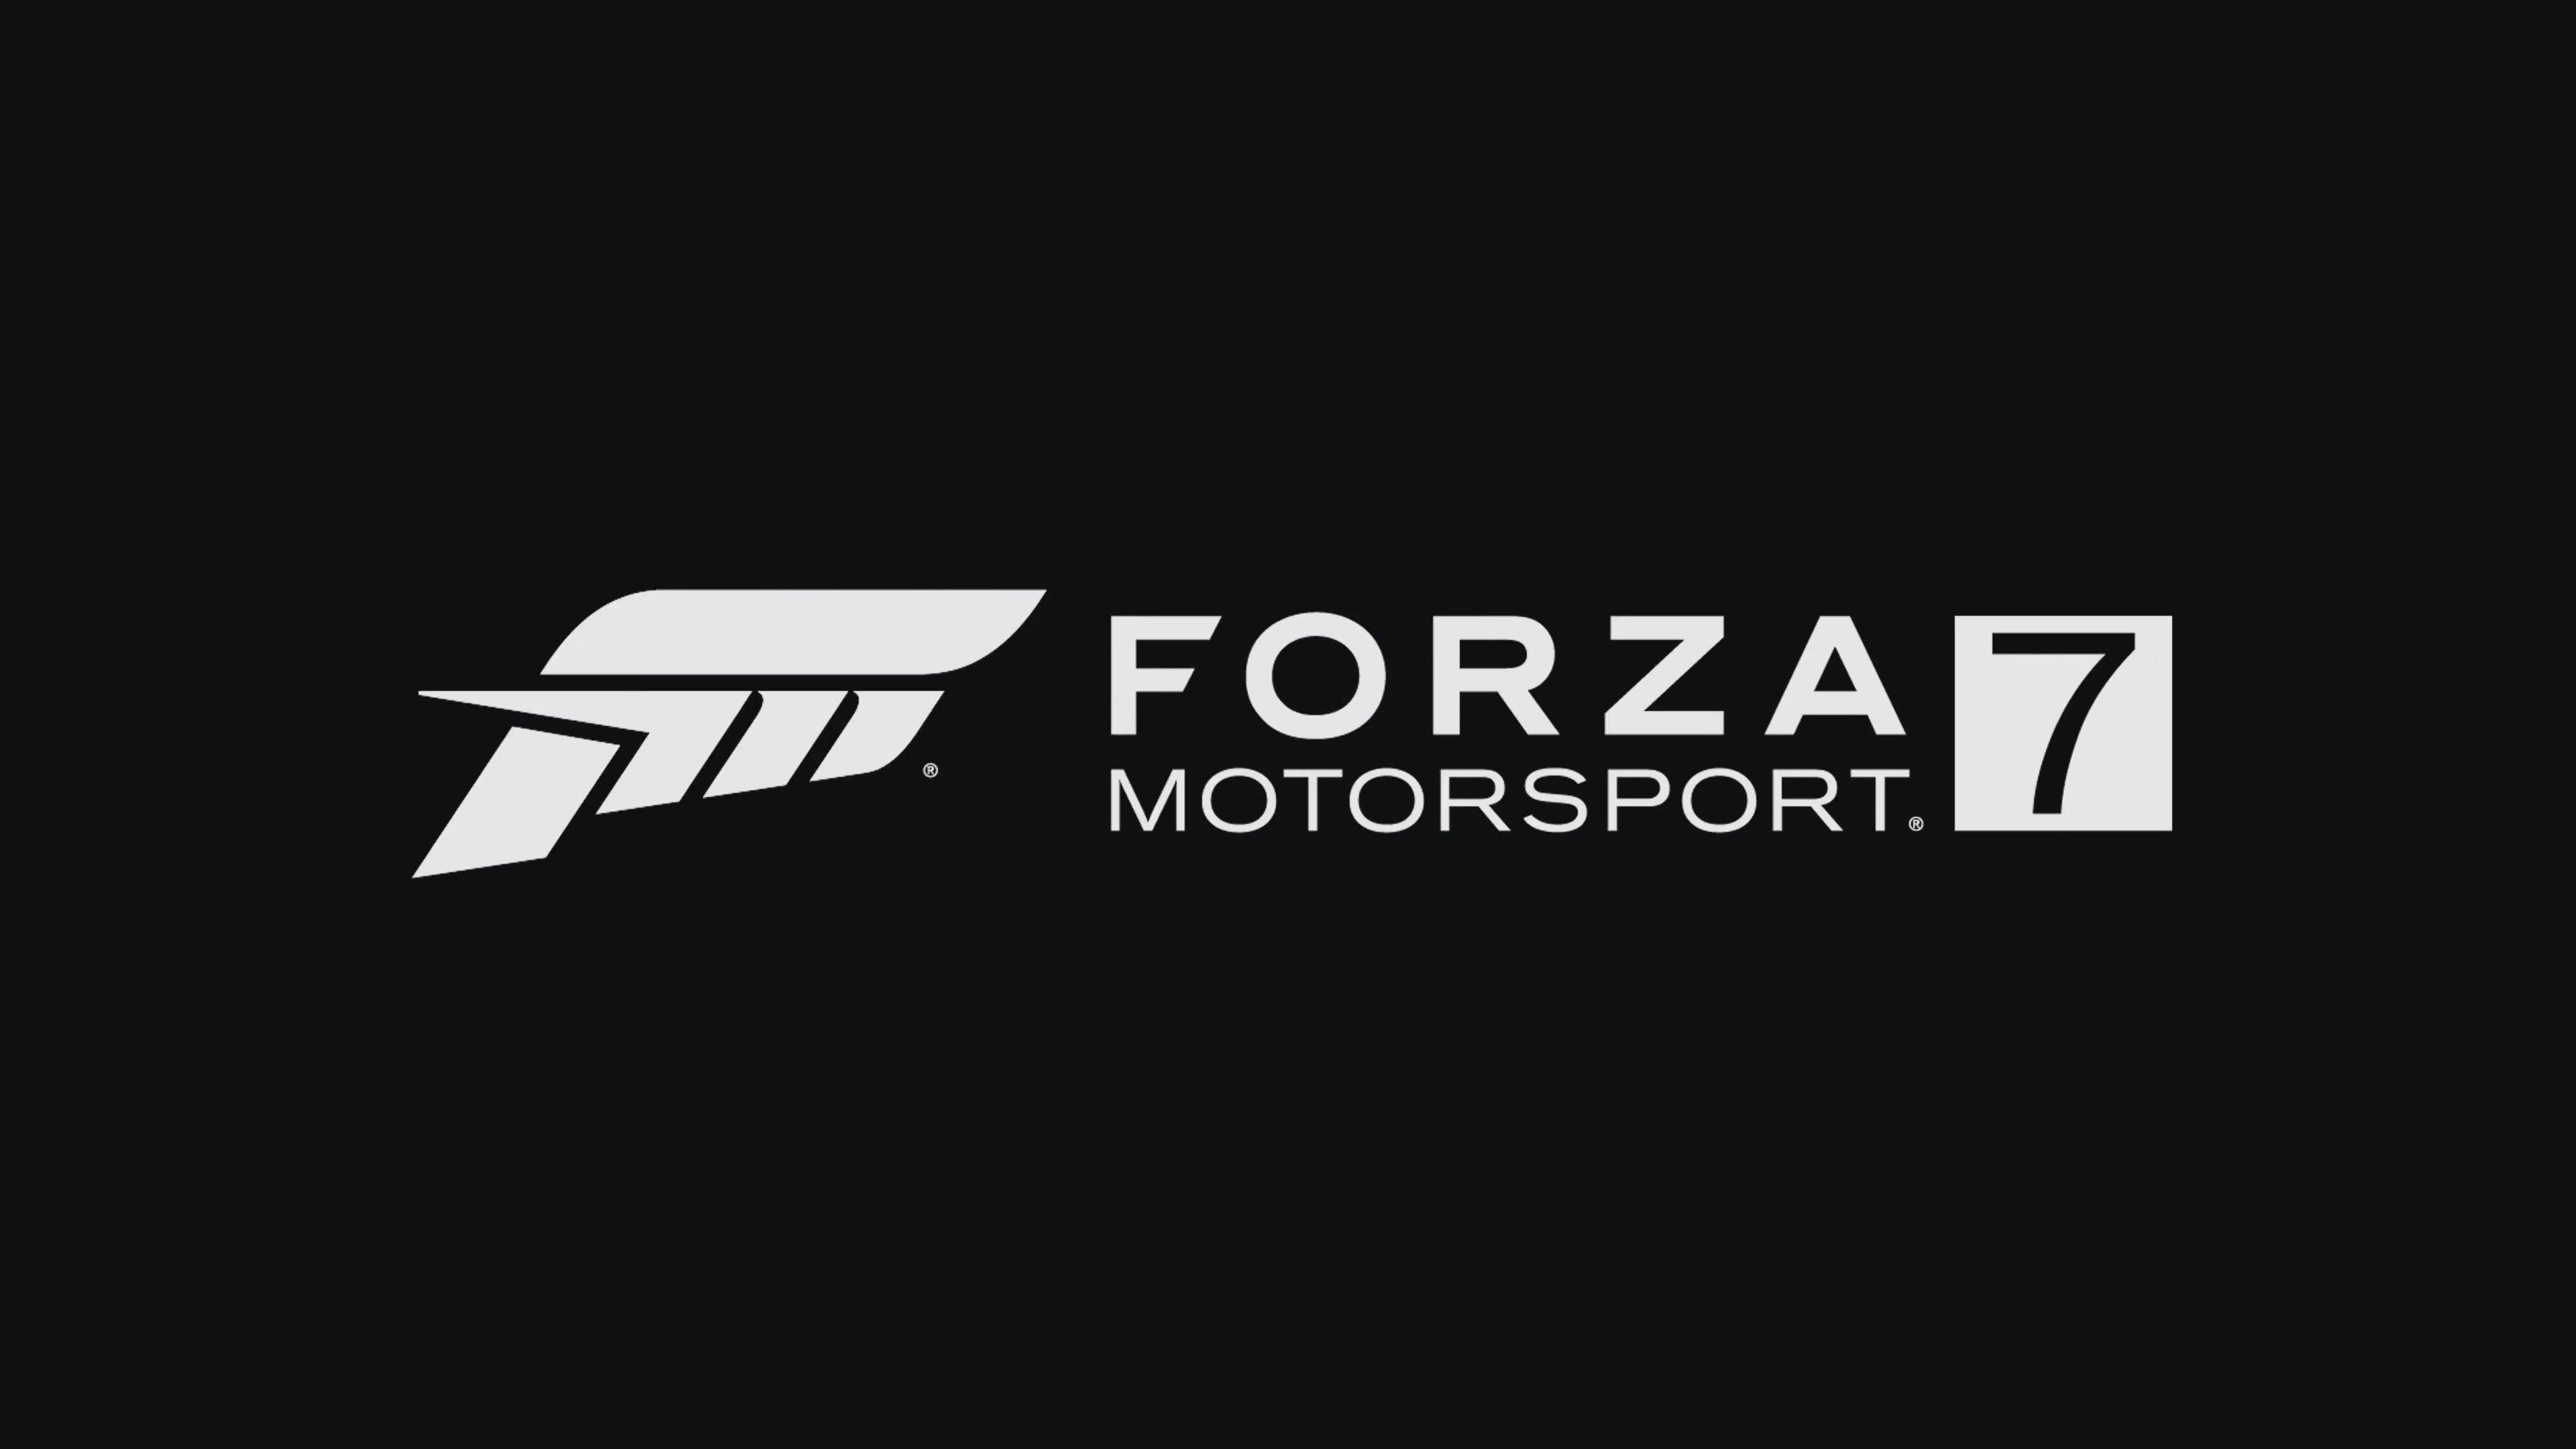 Forza Motorsport 7 Wallpaper Backgrounds